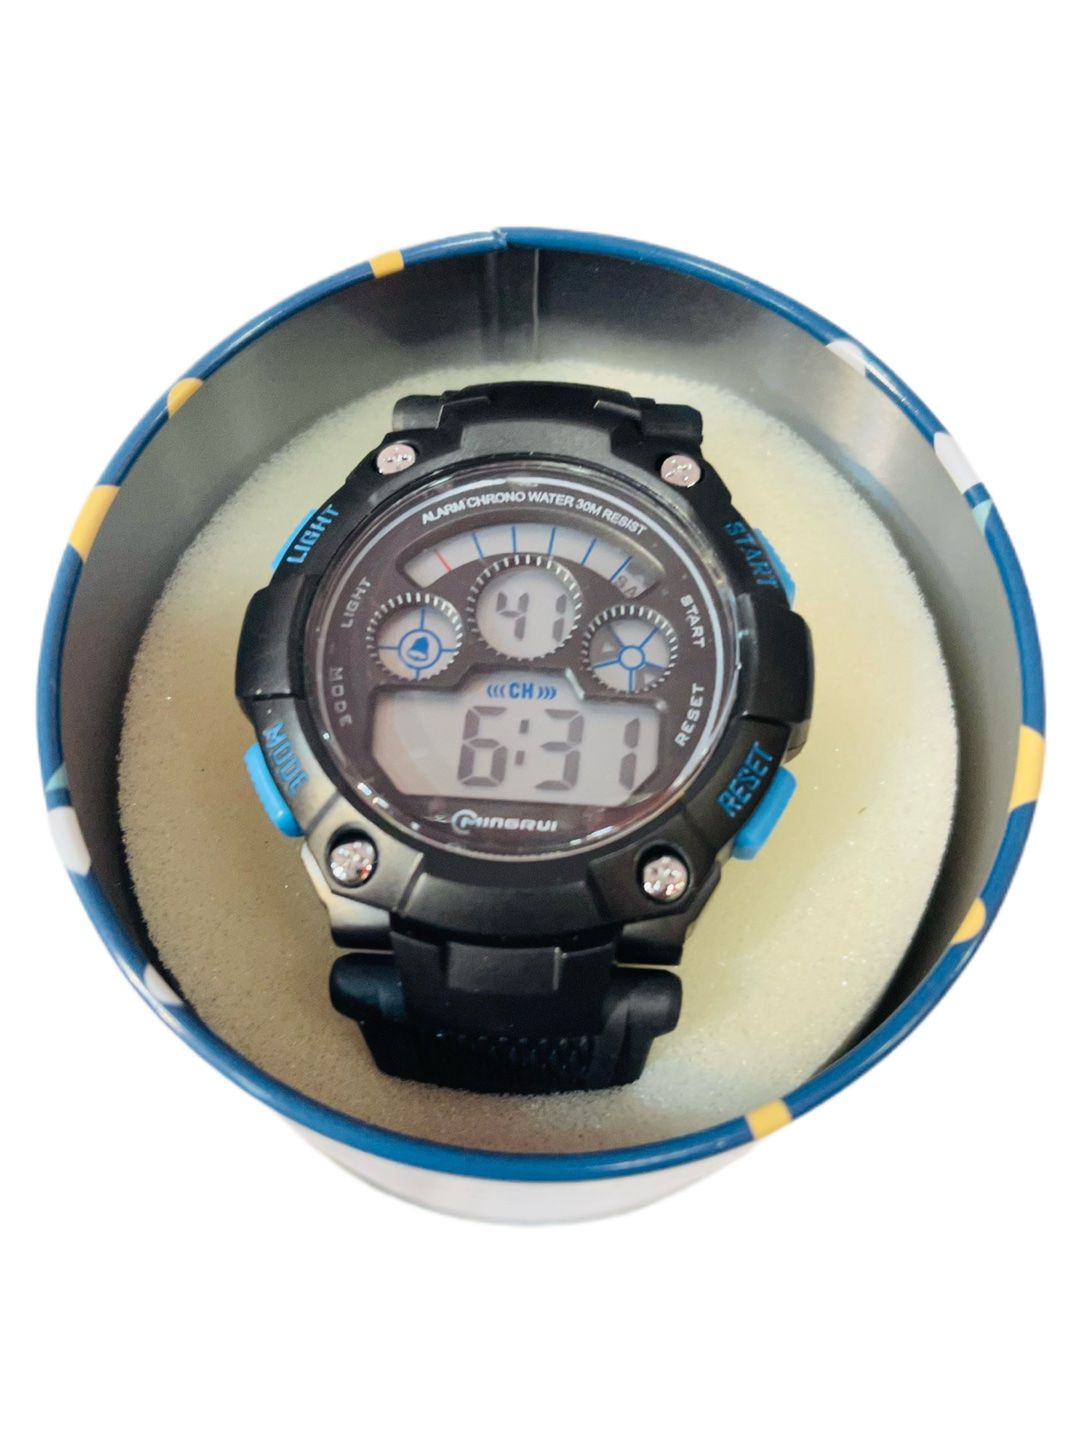 mingrui brand quartz gift wrist watch| Alibaba.com